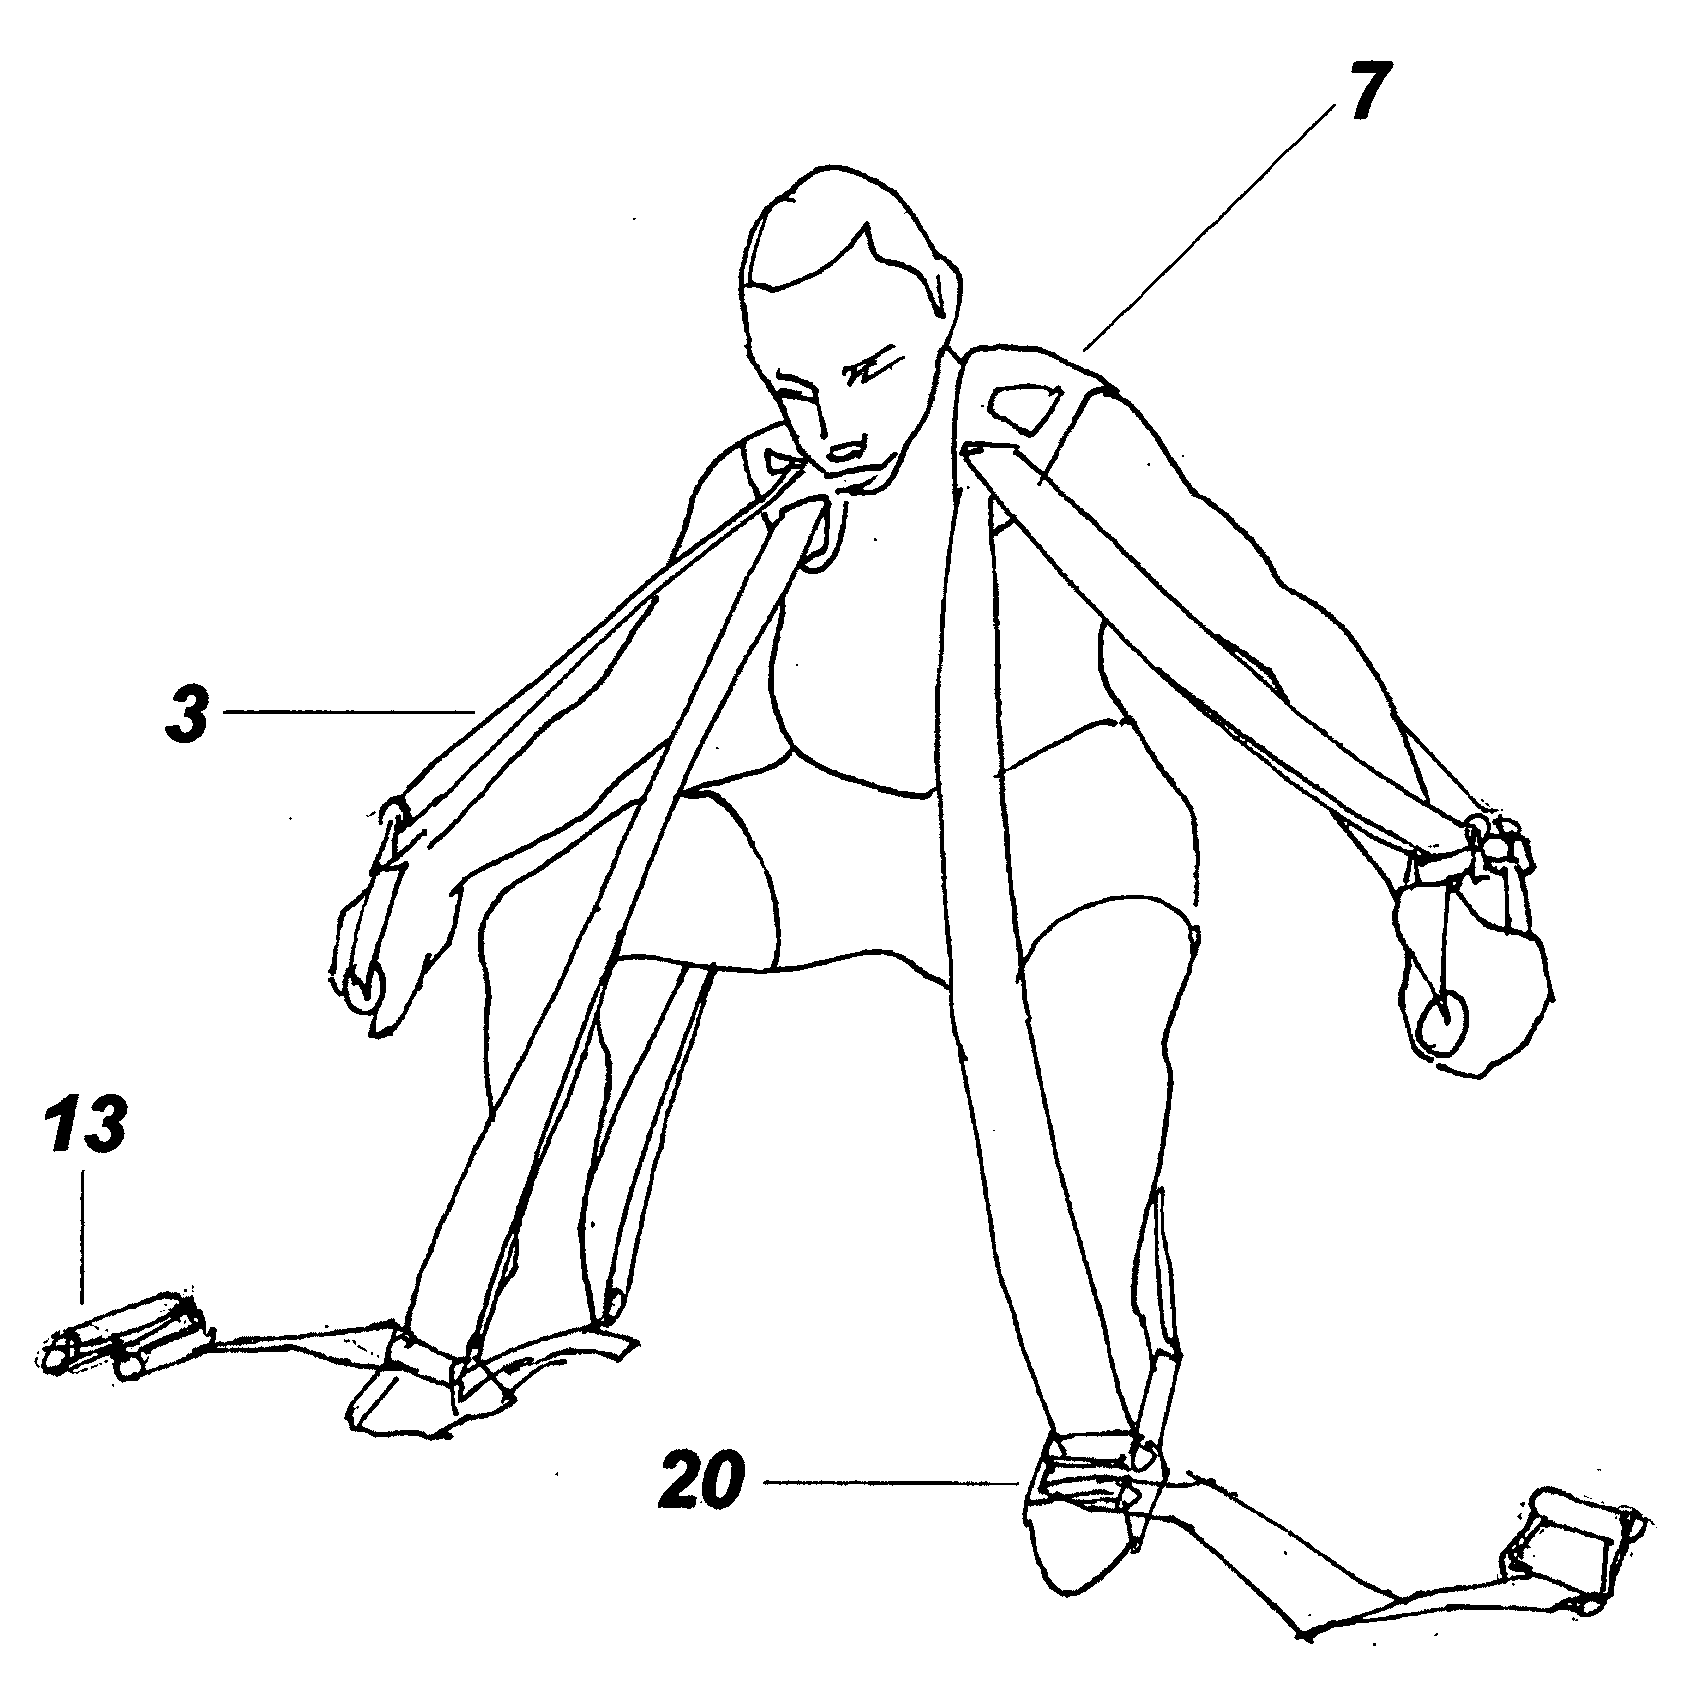 Rubber belt musculoskeletal training device